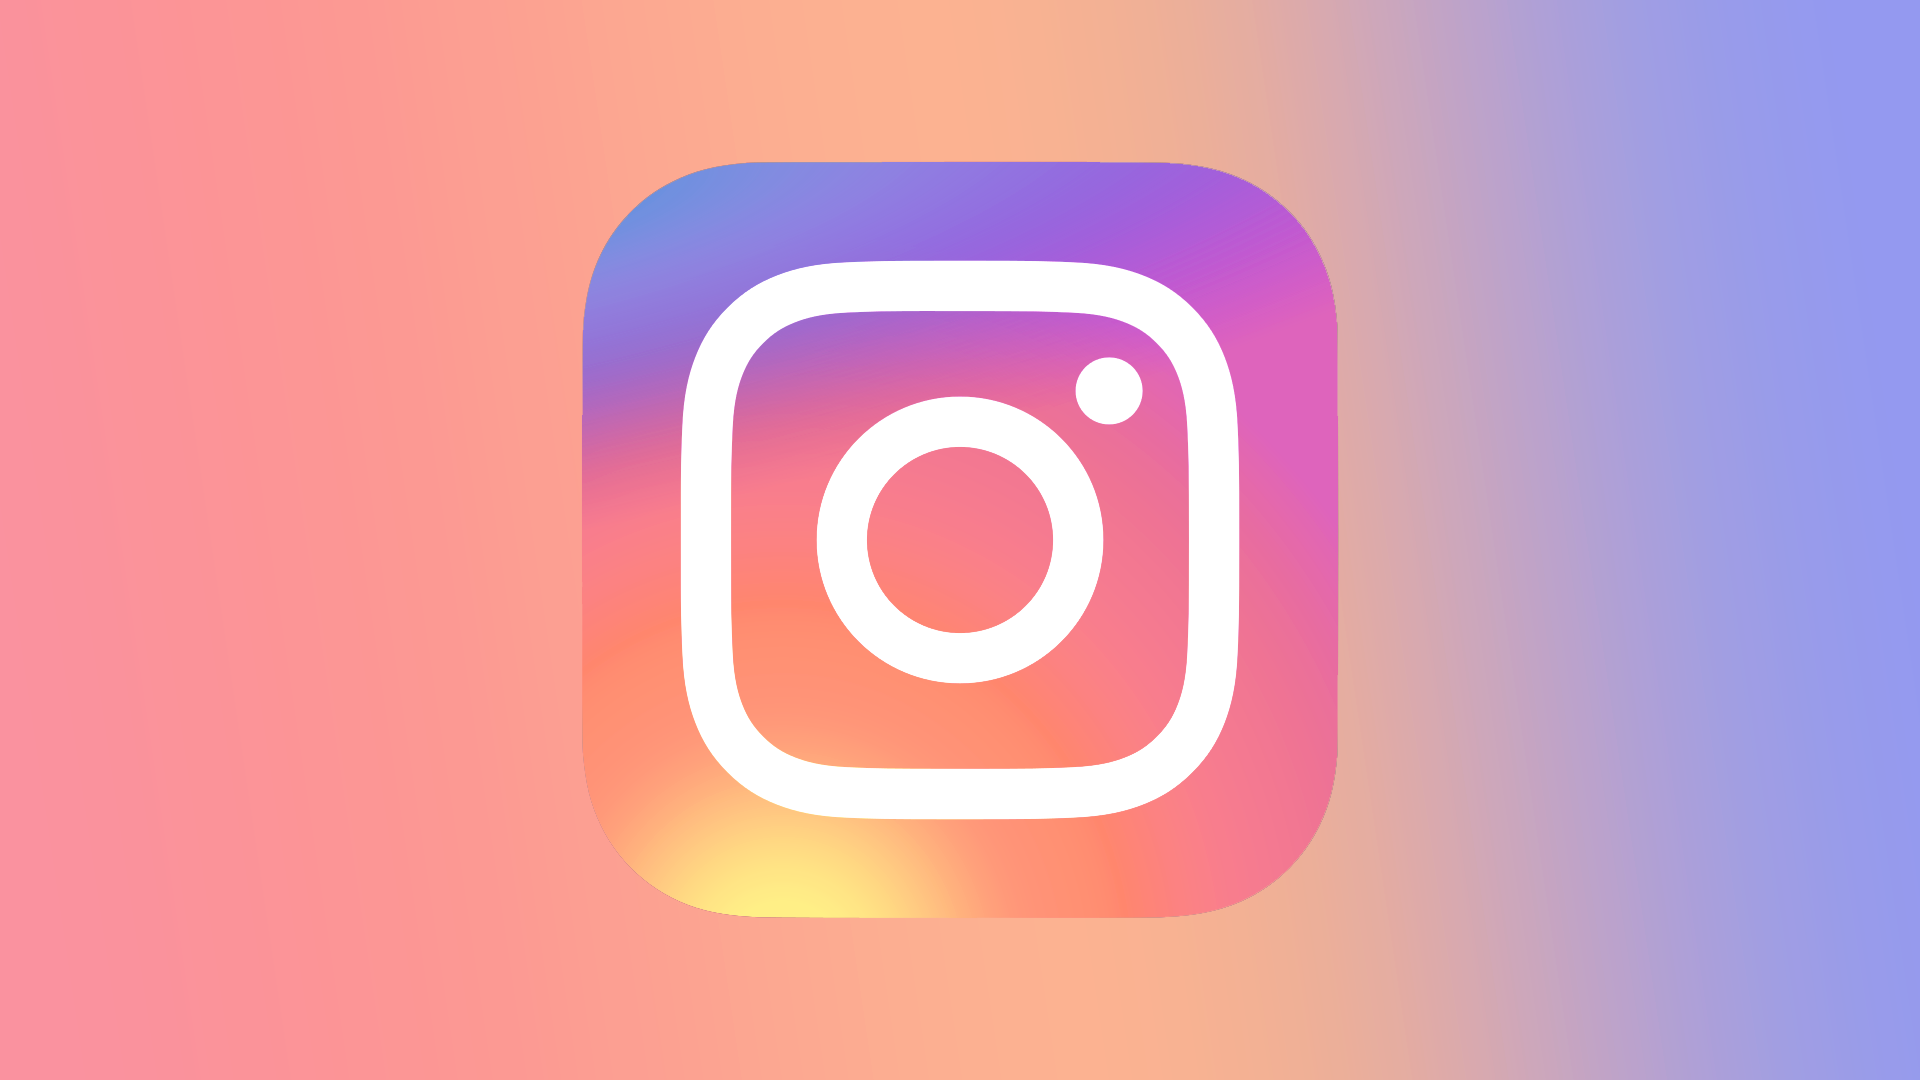 Instagram makes yet another design blunder